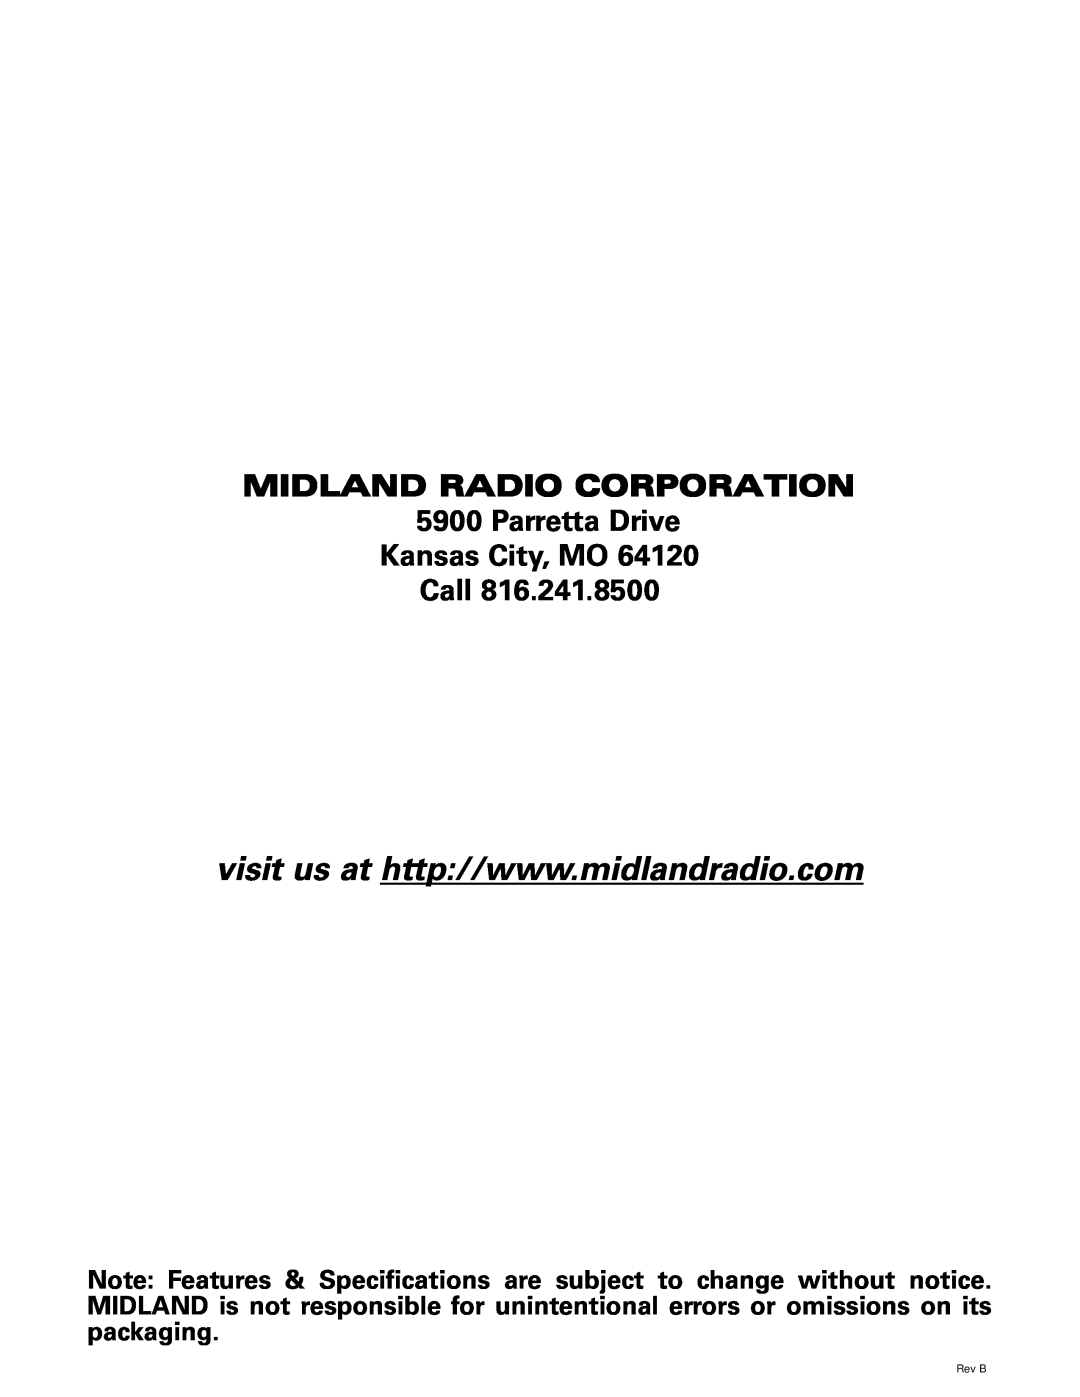 Midland Radio NT1VP, NT1 SERIES owner manual MIDLAND RADIO CORPORATION 5900 Parretta Drive Kansas City, MO Call, Rev B 